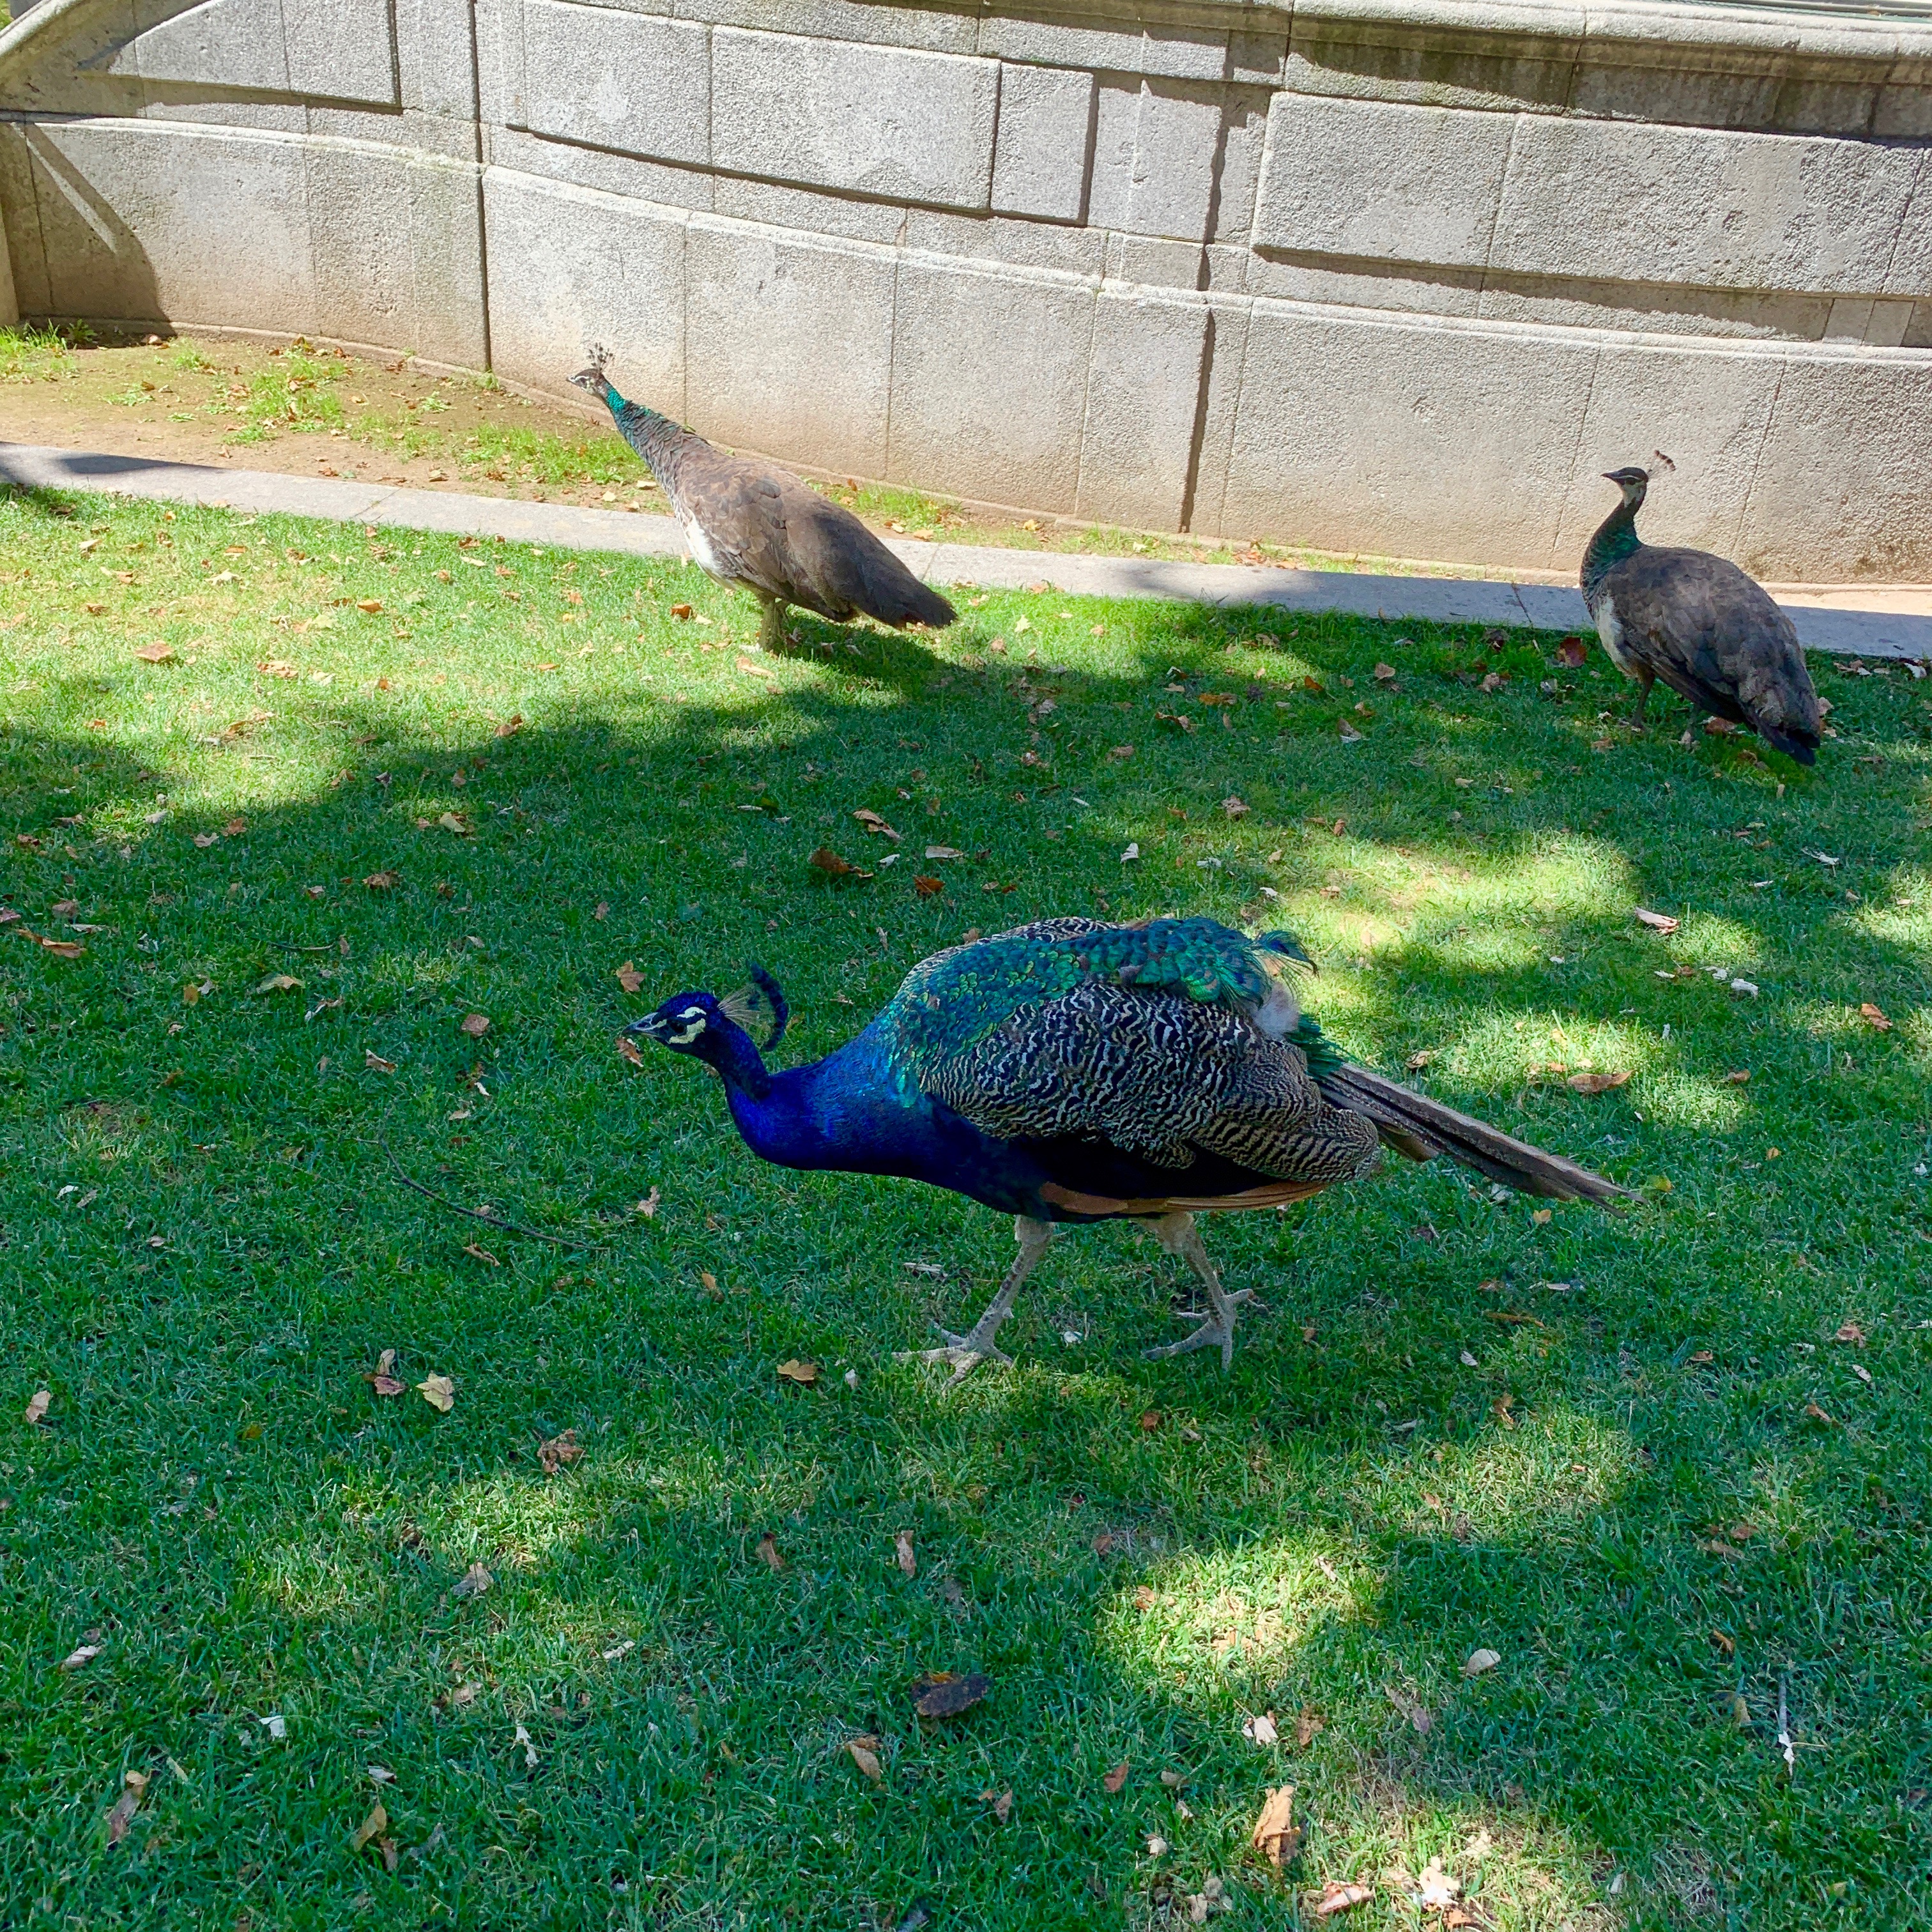 Peacocks at the Crystal Palace Gardens